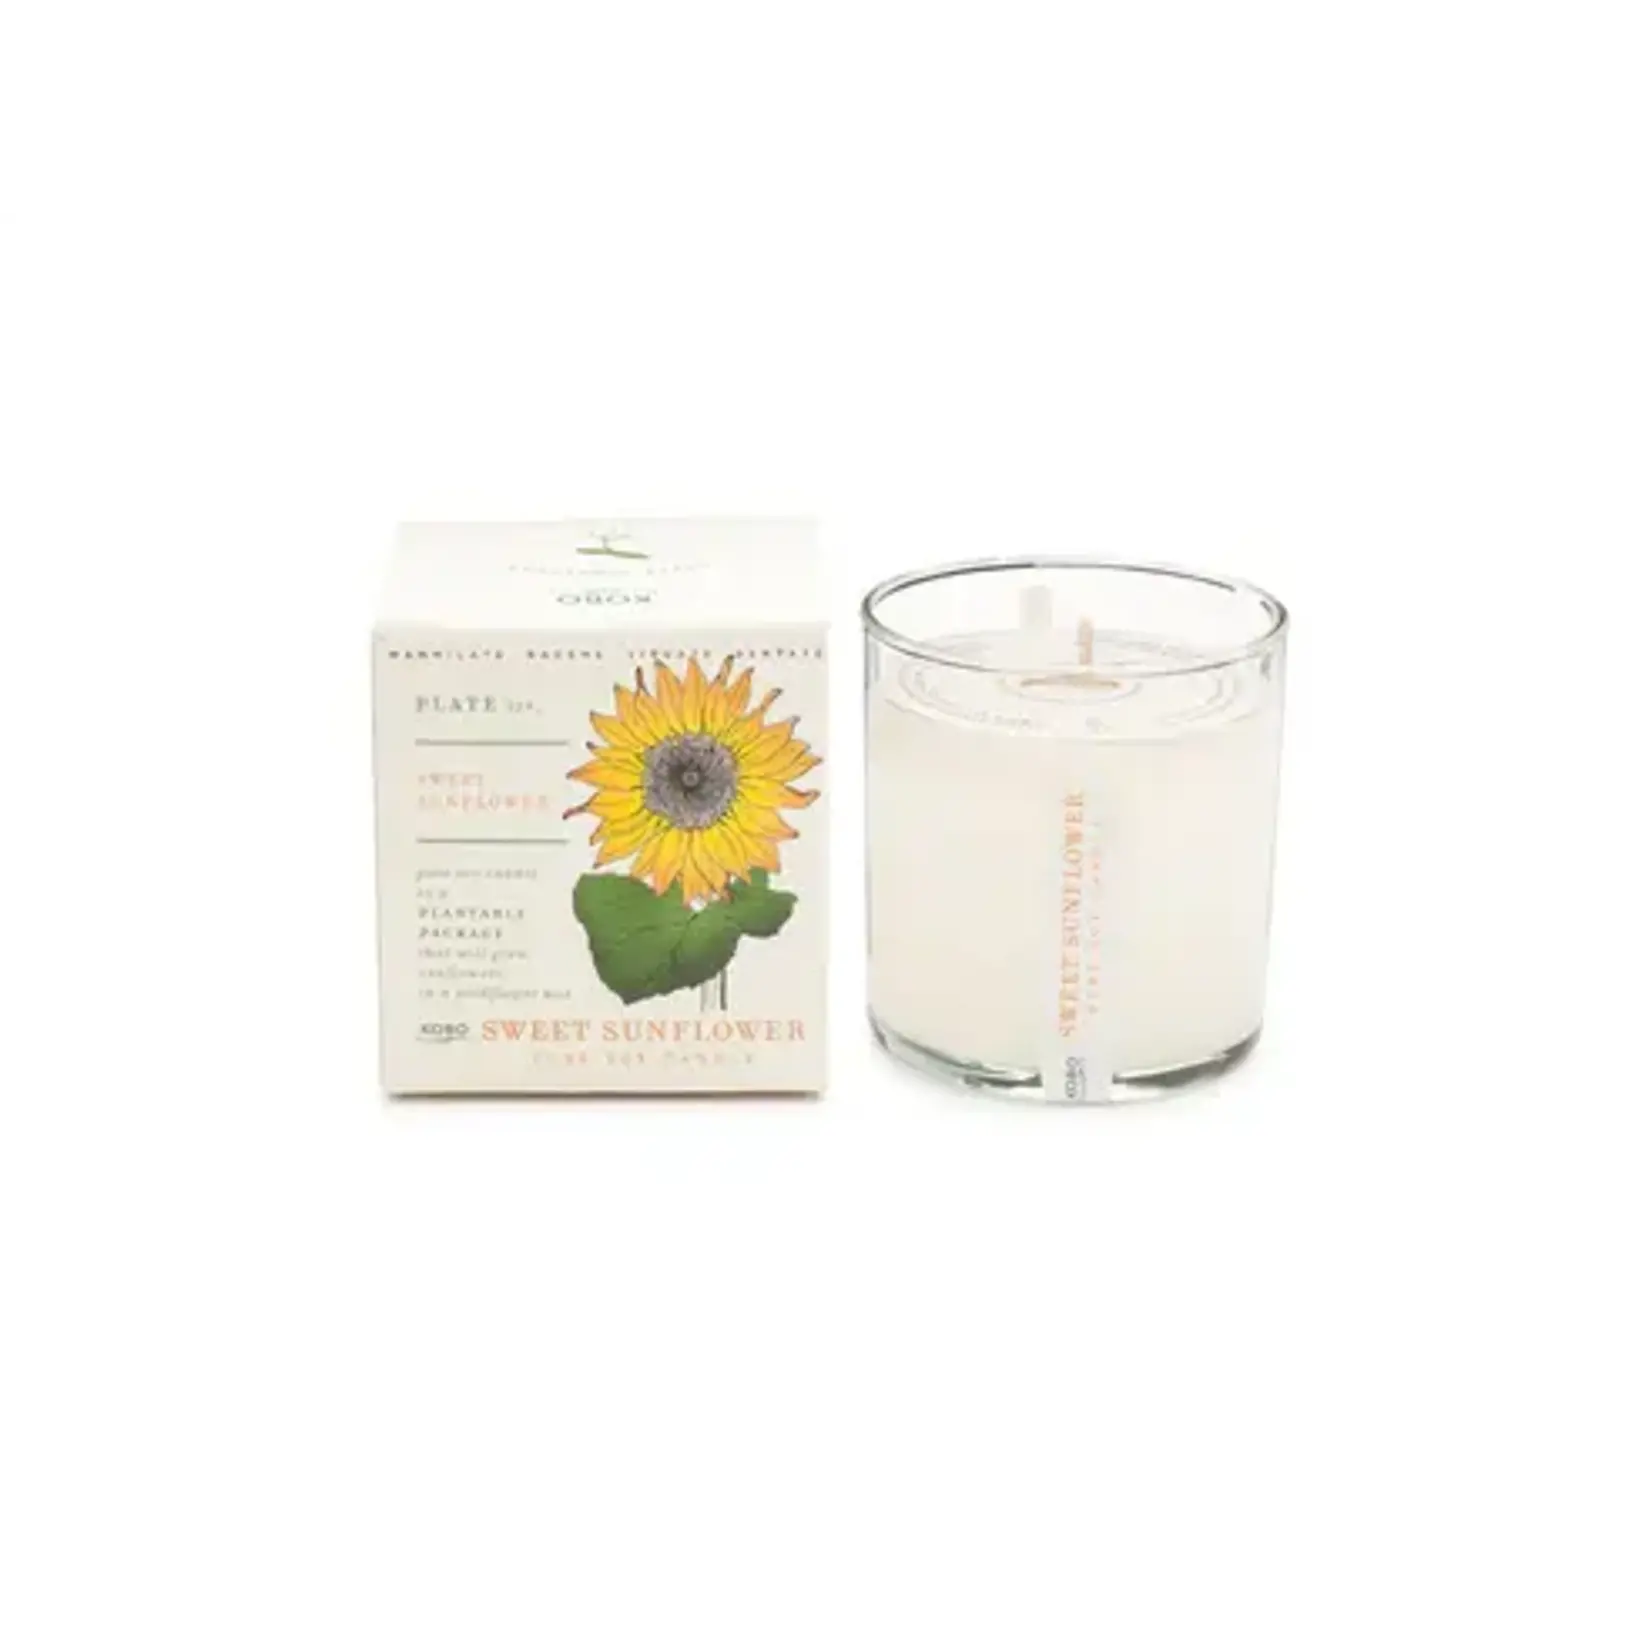 Kobo Sweet Sunflower Plant The Box Candle